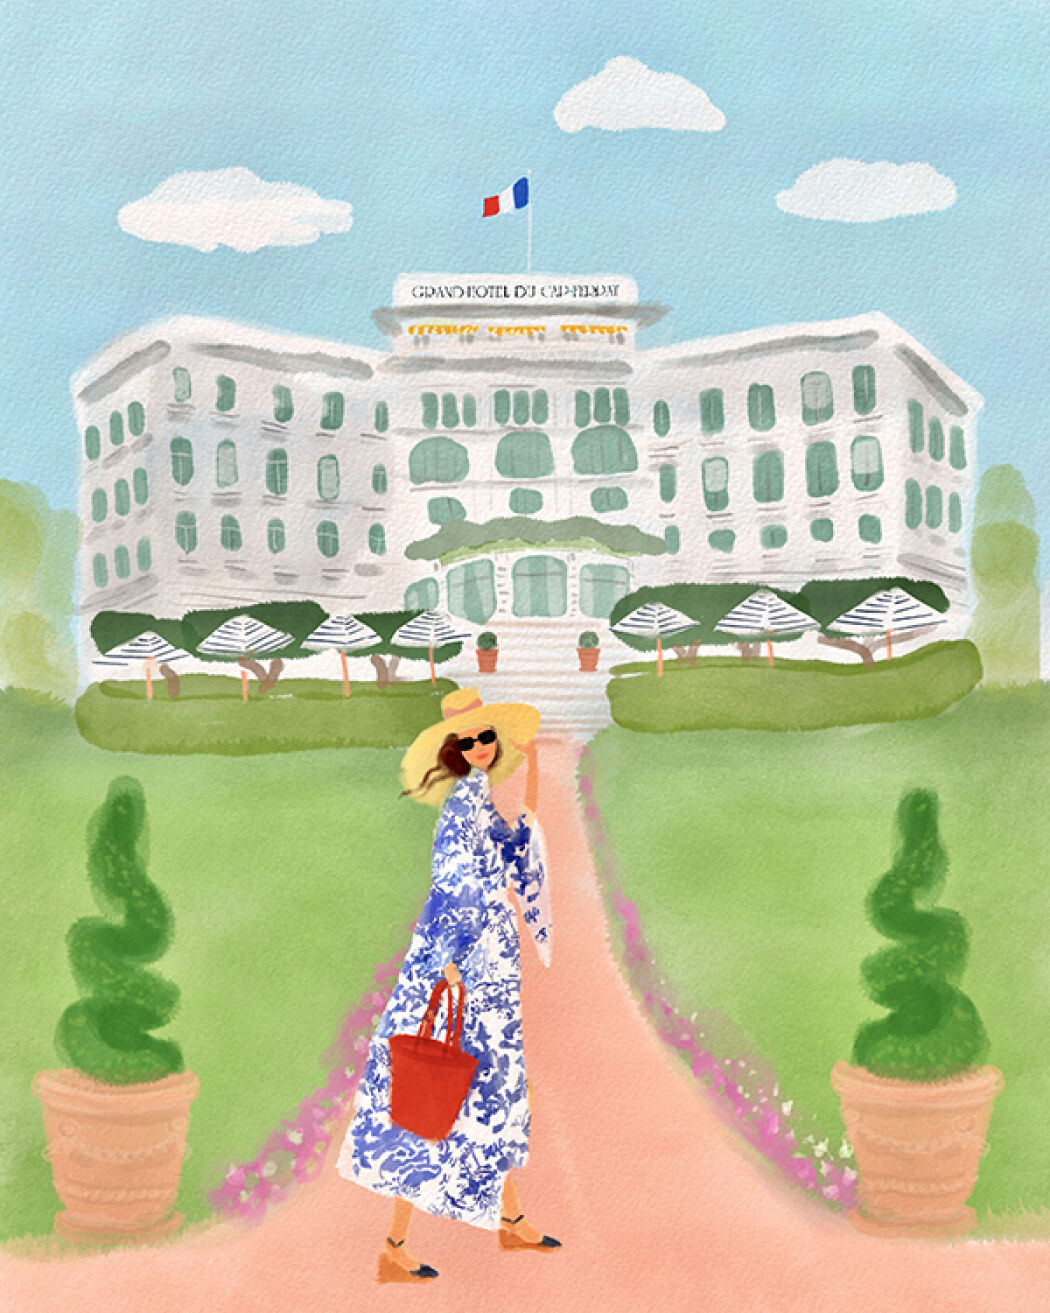 Advertising illustration for the Grand Hotel Du Cap Ferrat by Christina Gliha